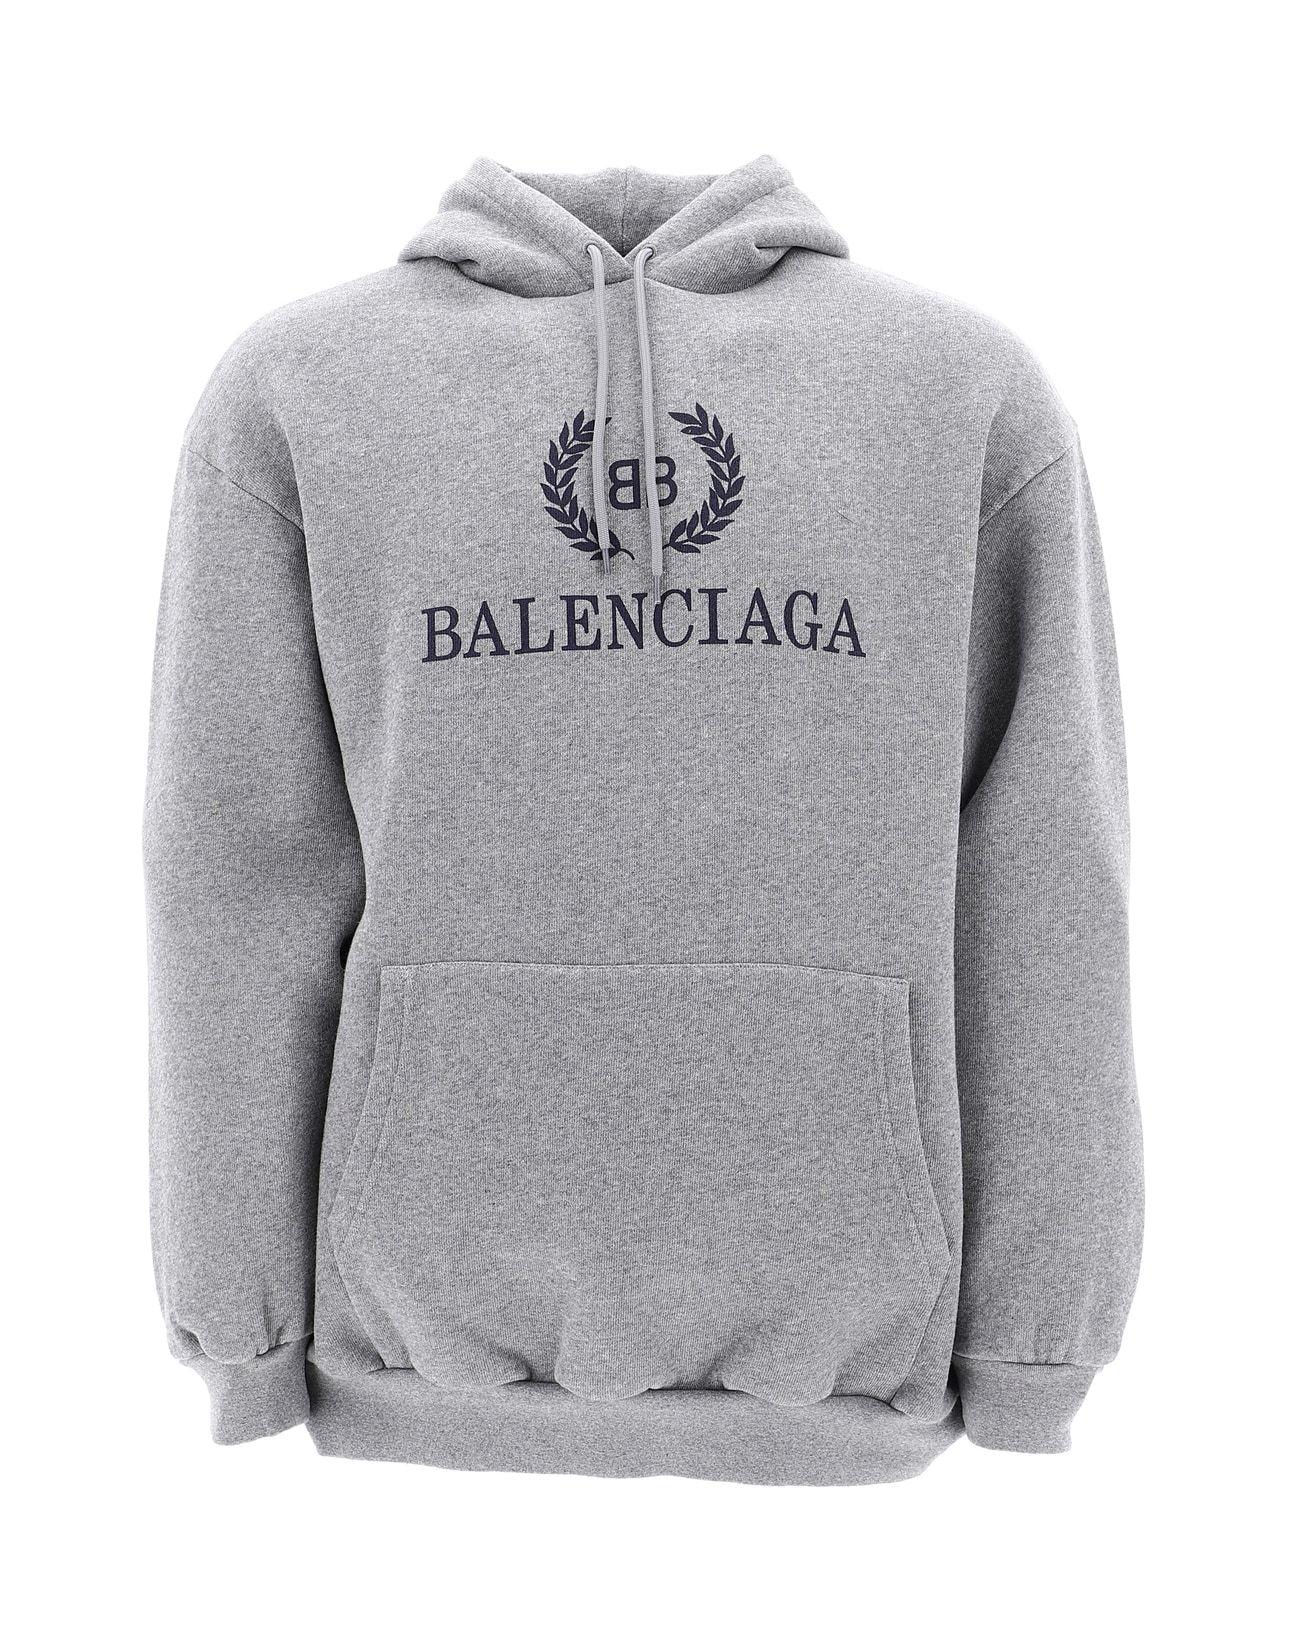 Balenciaga Fleece Printed Logo Hoodie in Grey (Gray) for Men - Lyst